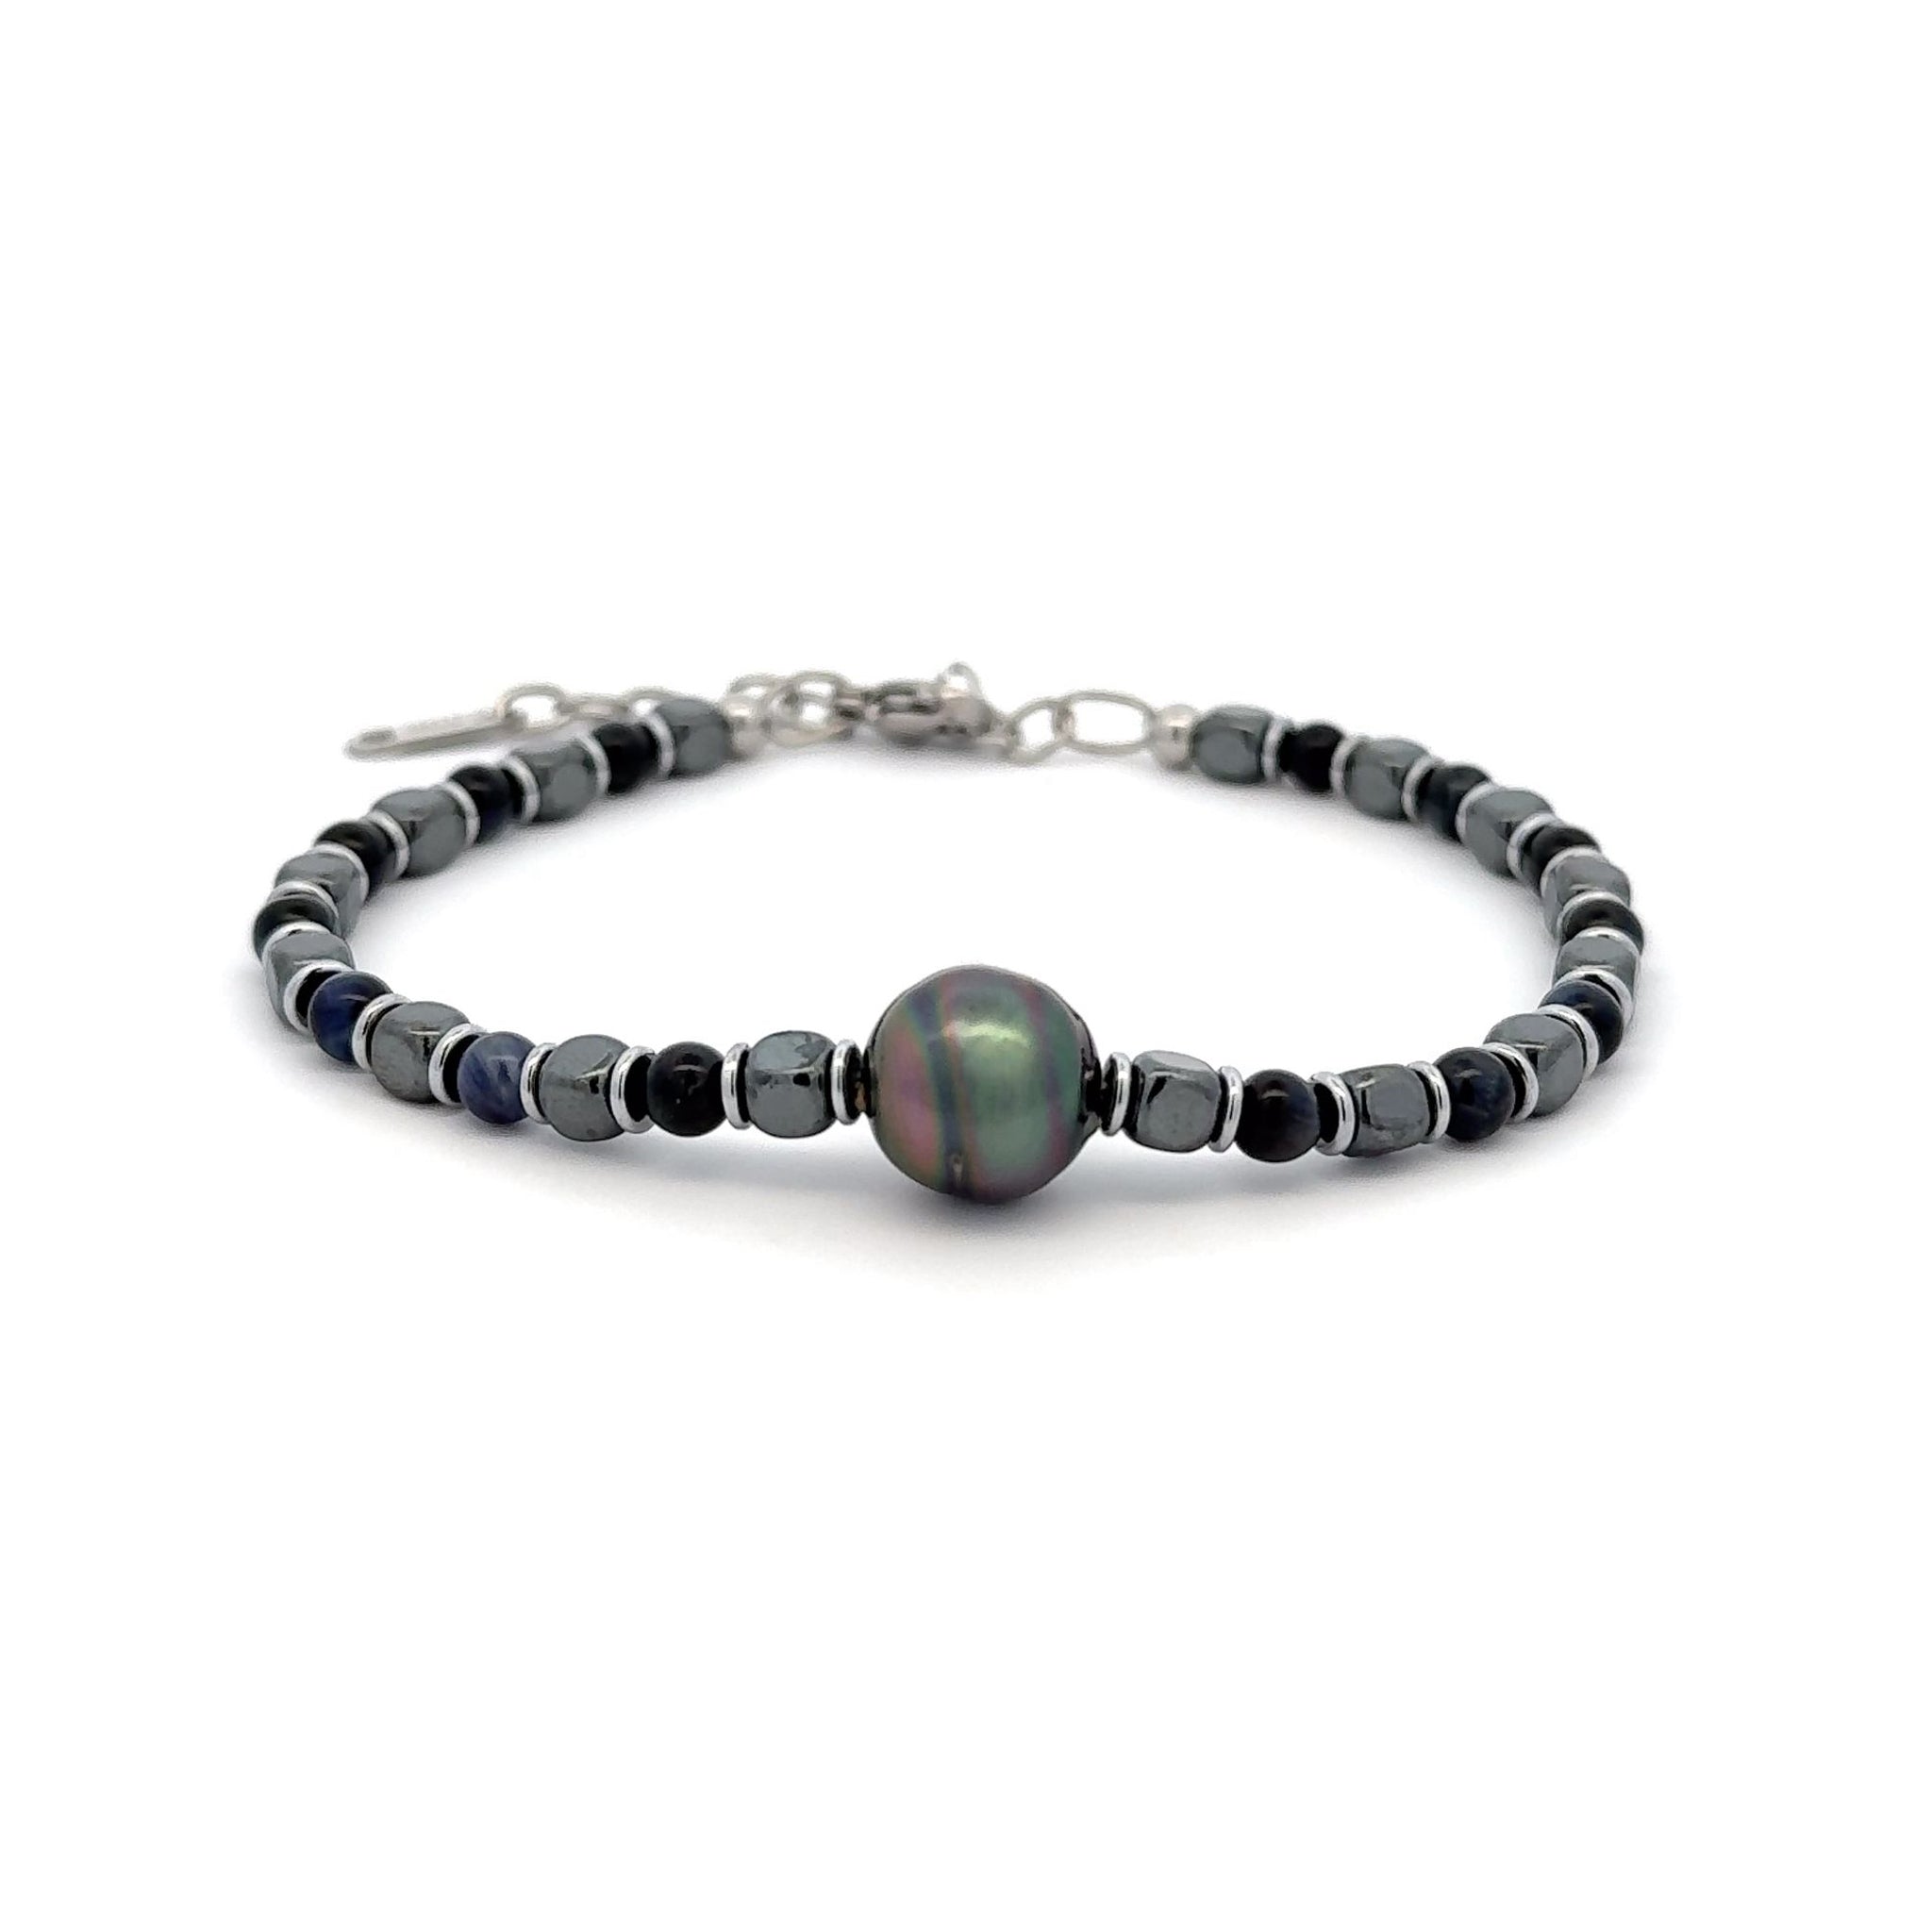 Tahitian Pearl and Silver/Black/Grey Hematite Natural Stone Variable Length Bracelet